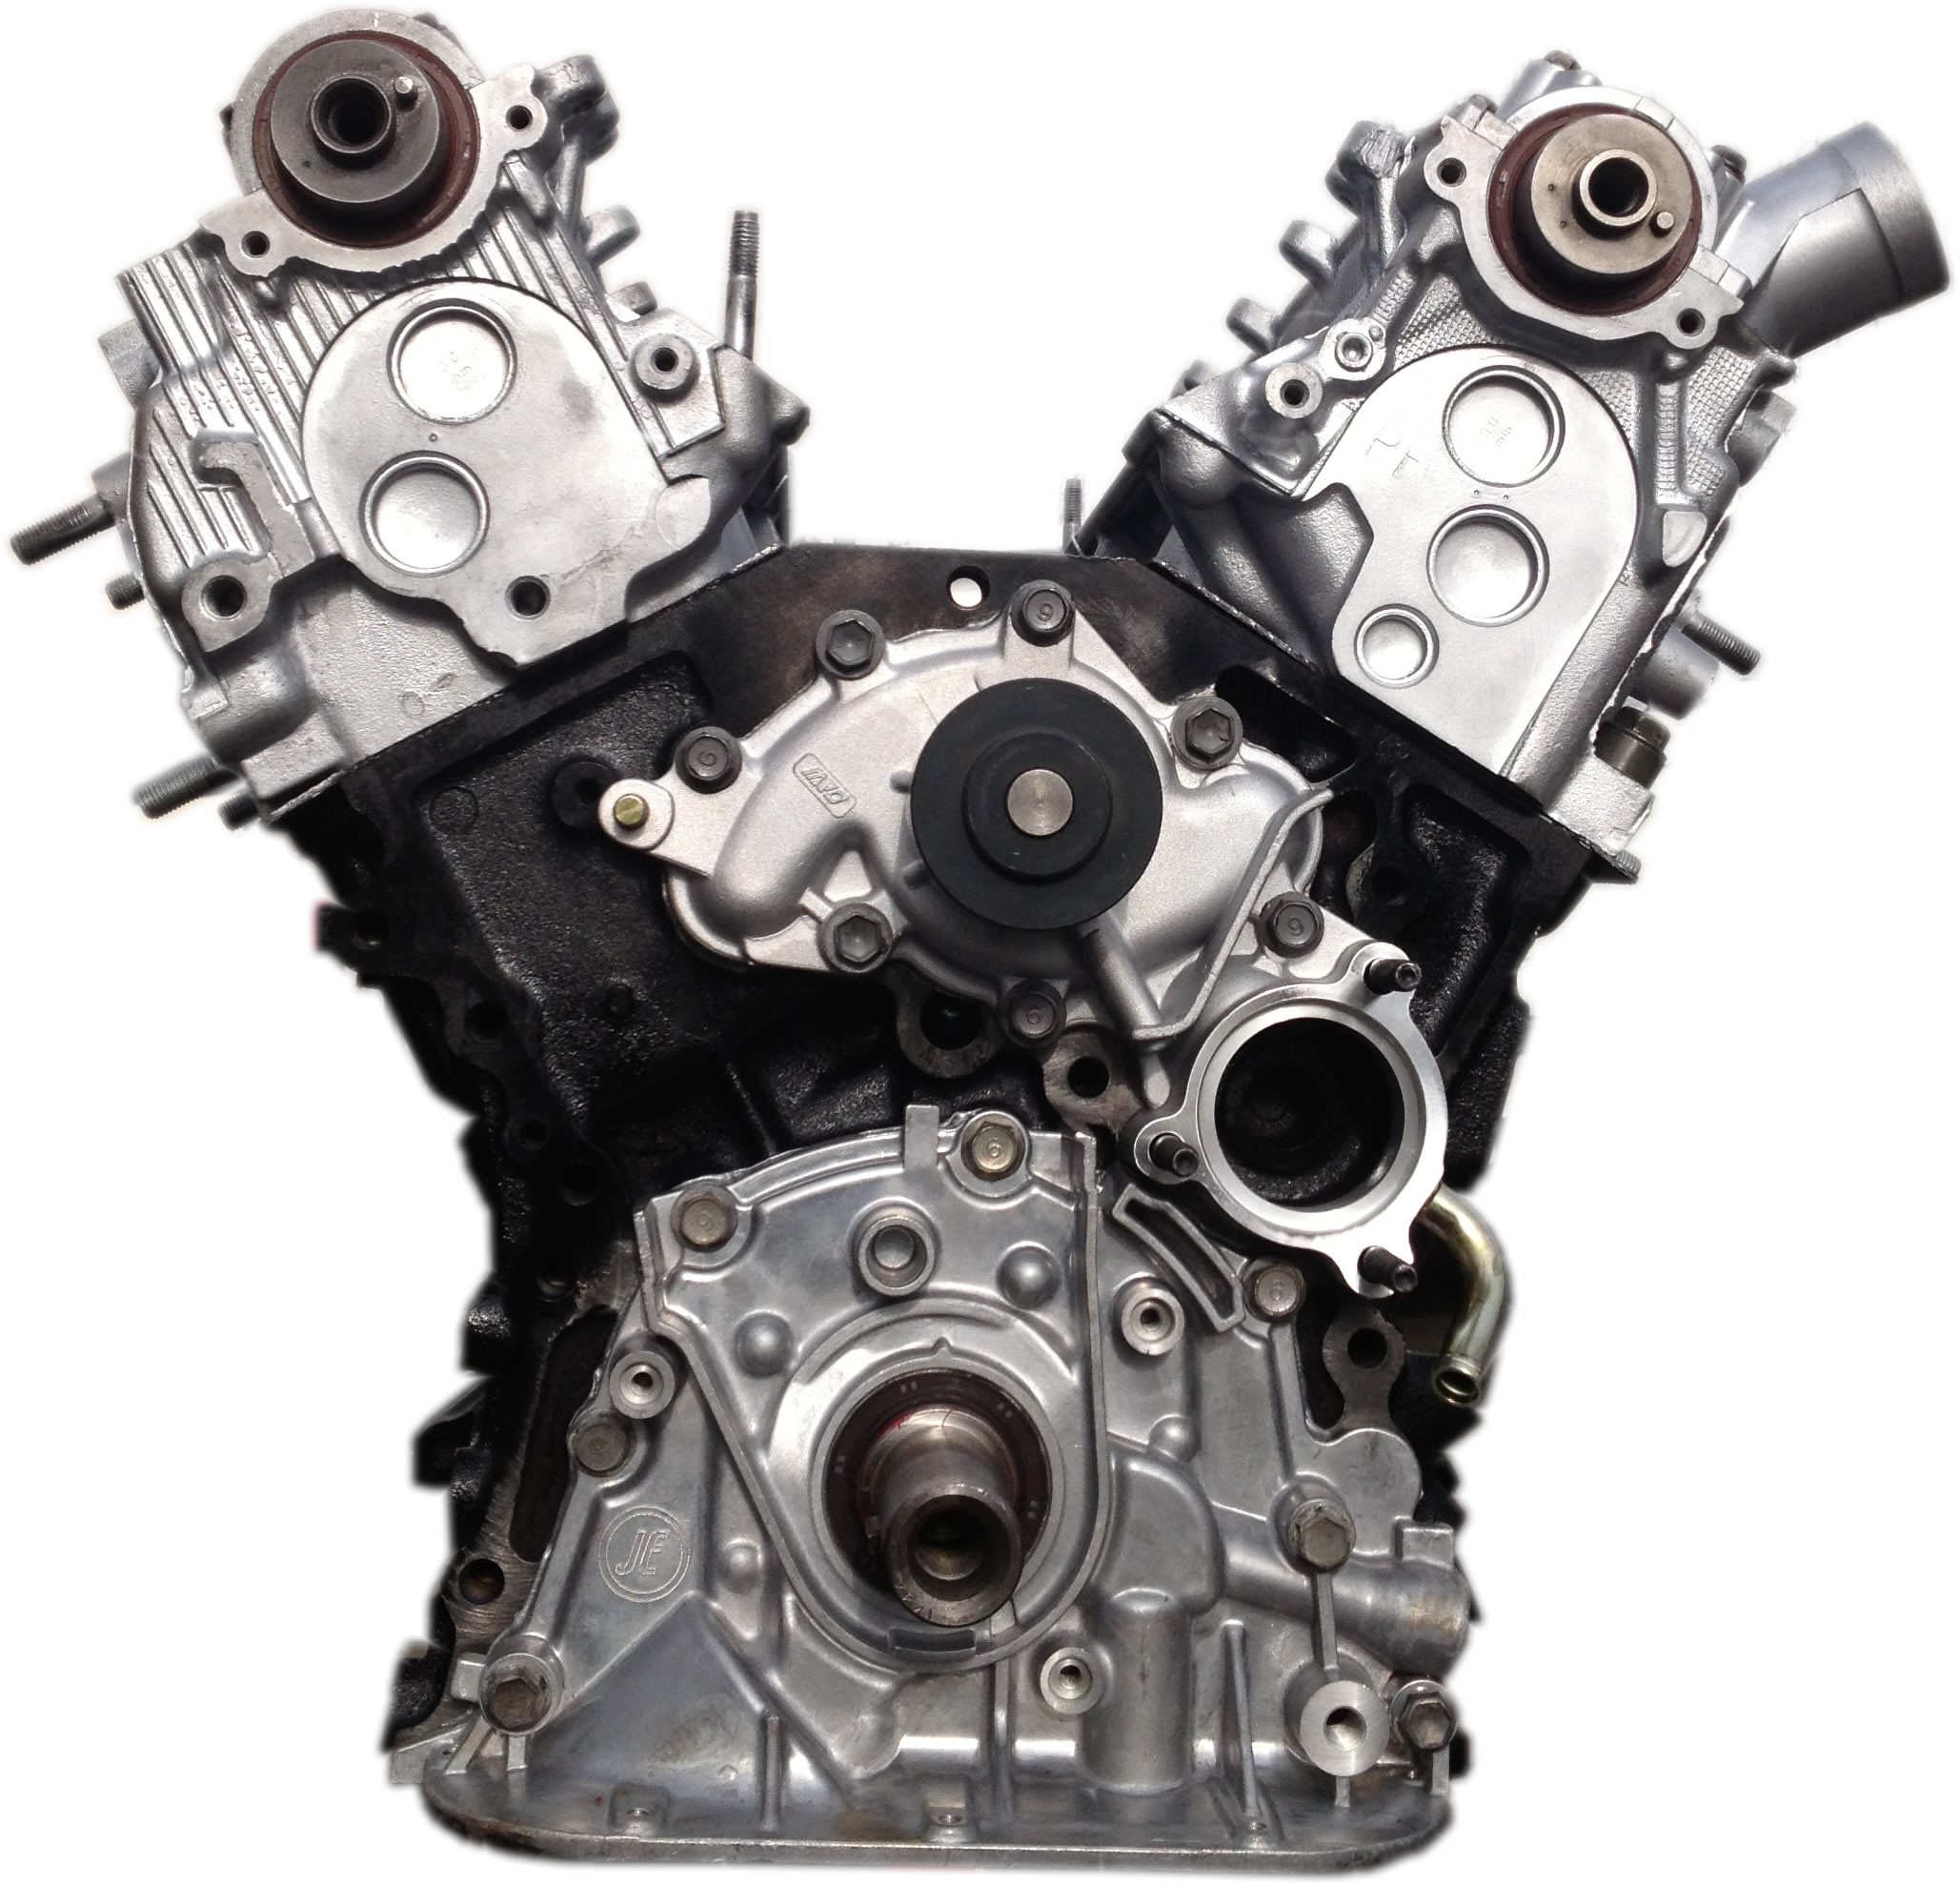 Toyota 4runner 3.0 Engine For Sale